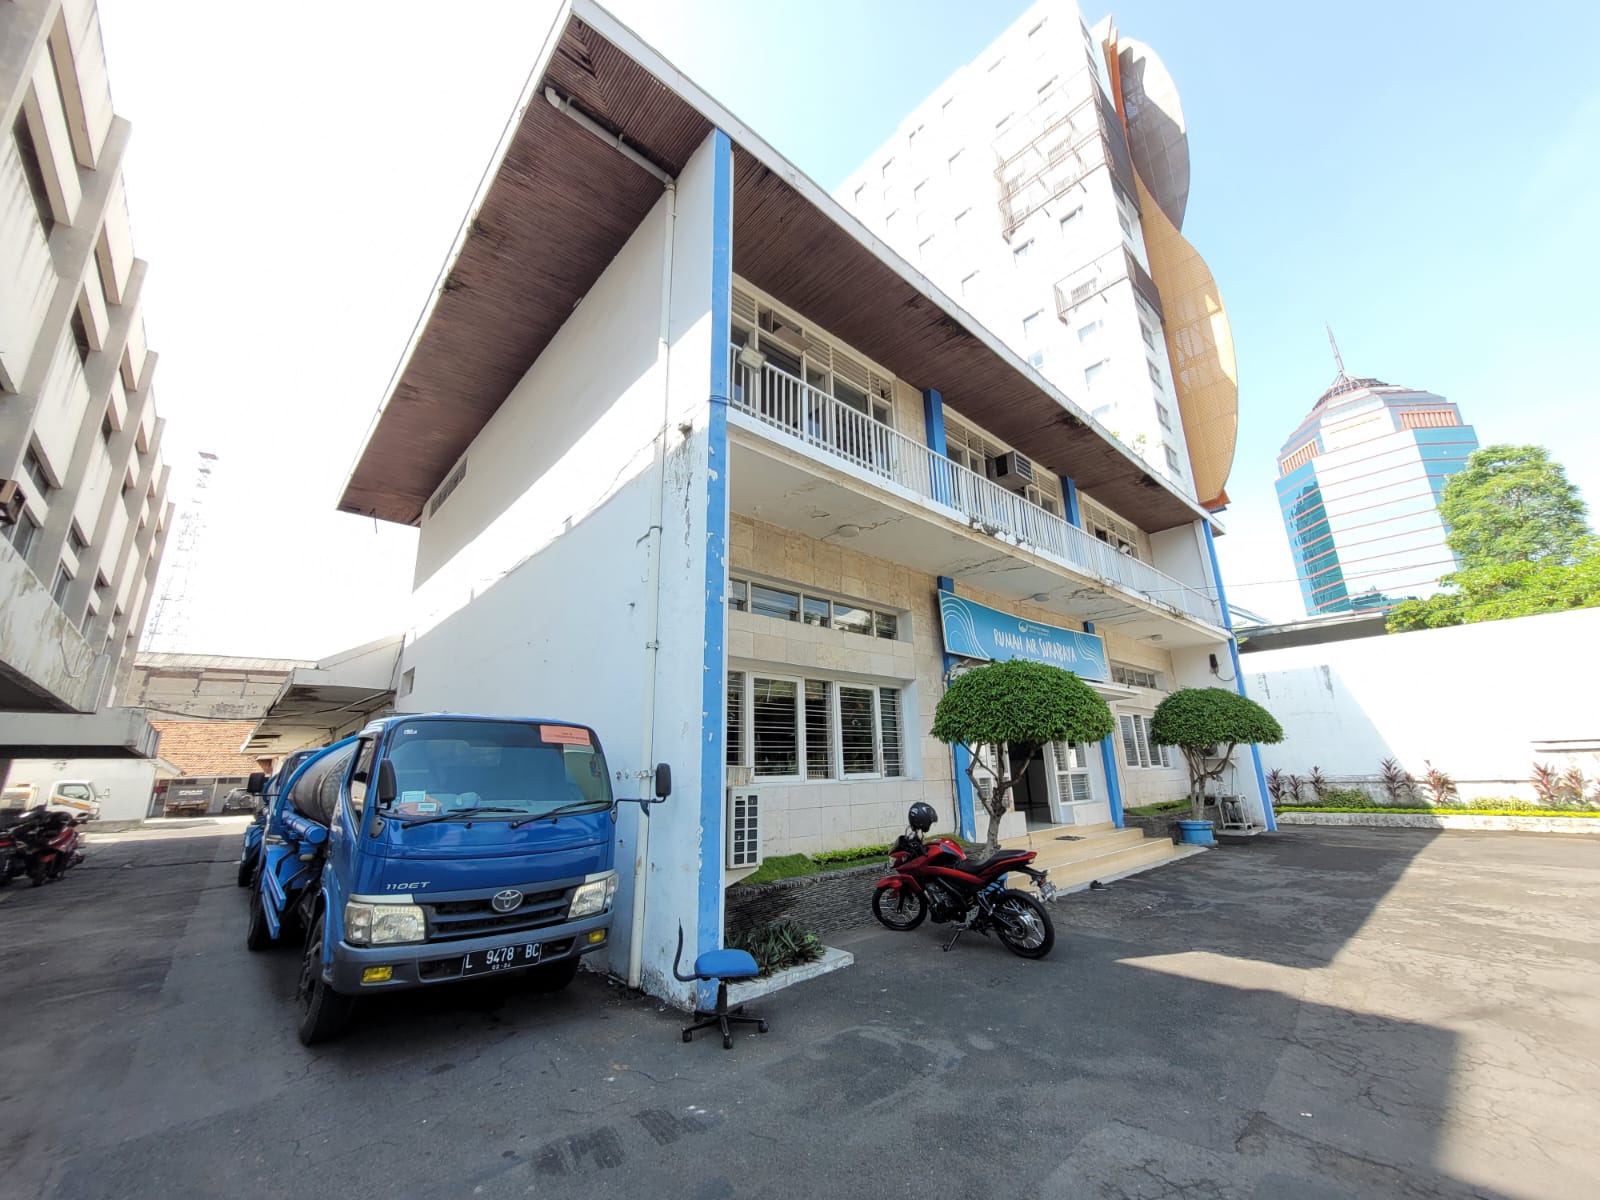 Kantor PDAM / Rumah Air Surabaya